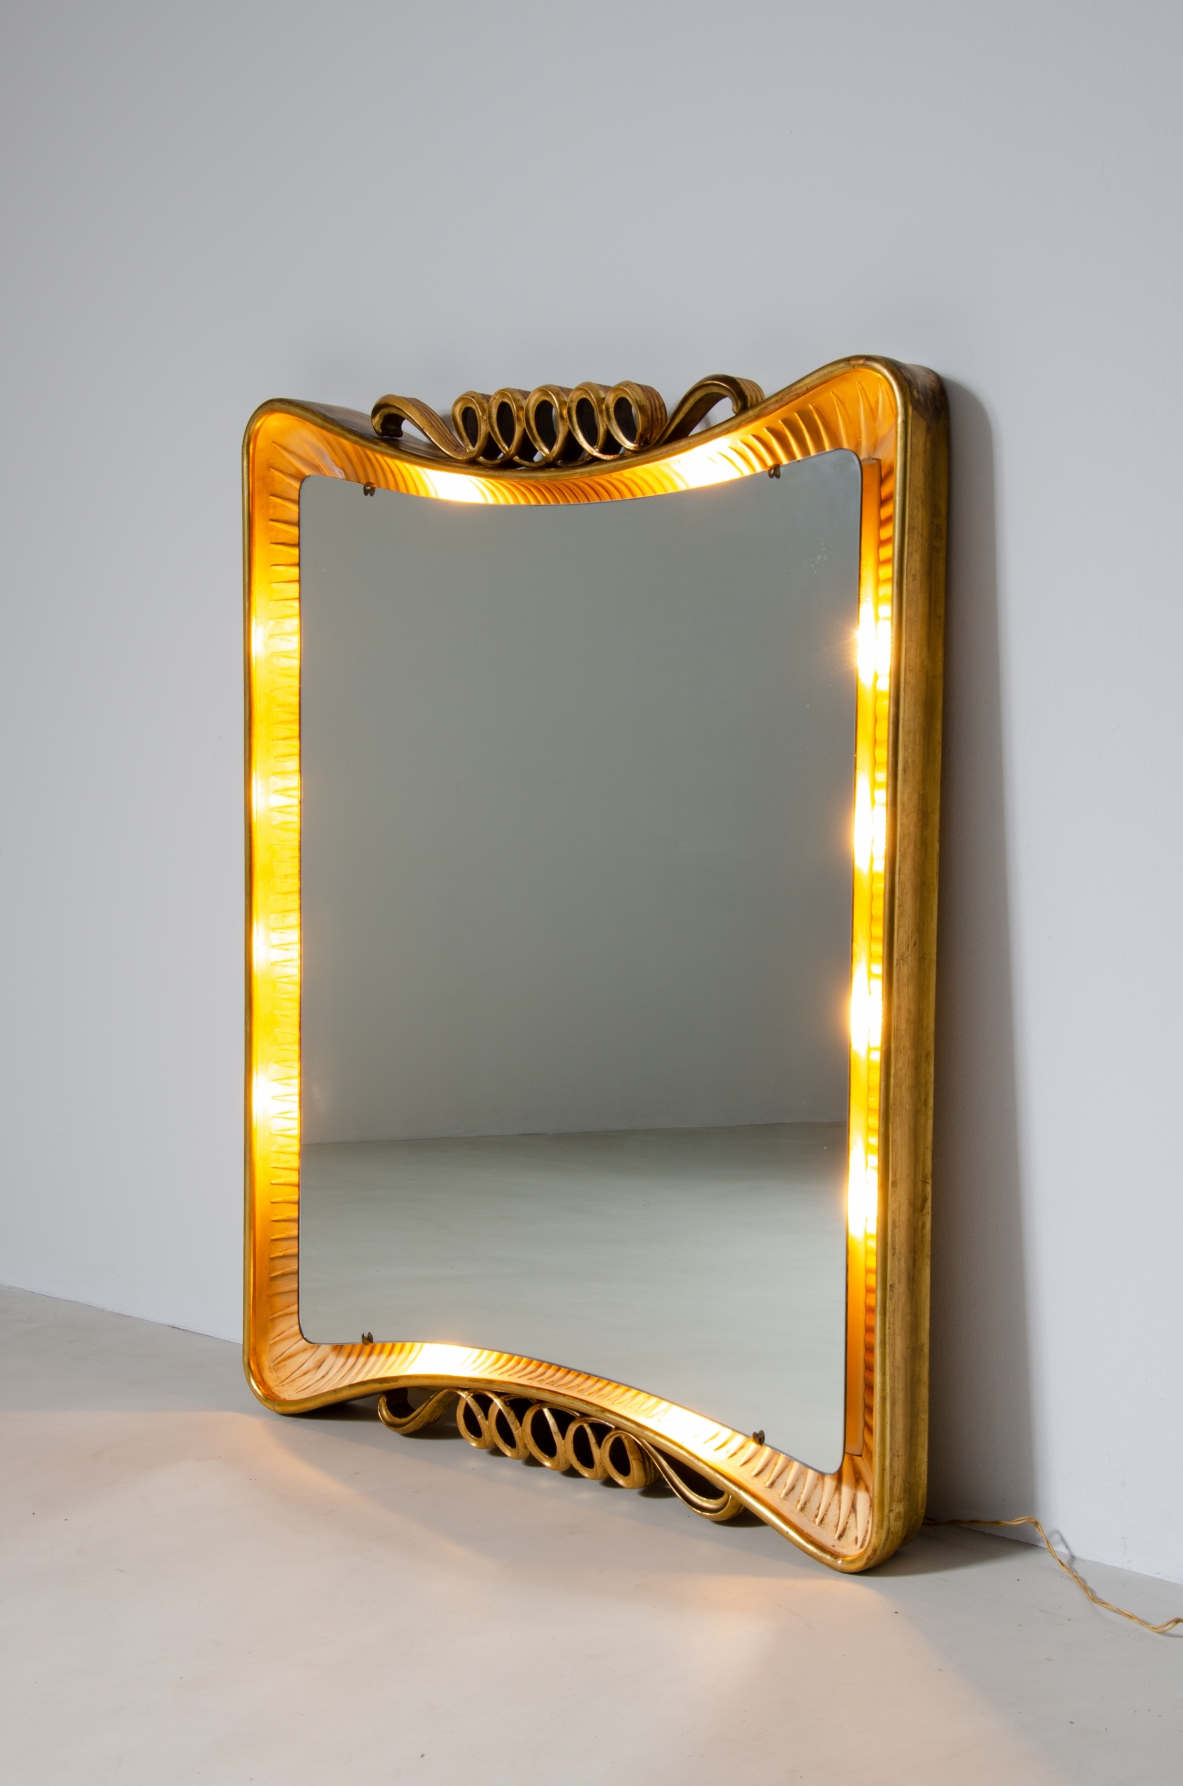 Osvaldo Borsani, rare backlit mirror in gilded wood.  ABV Borsani Varedo manufacture, 1940's.